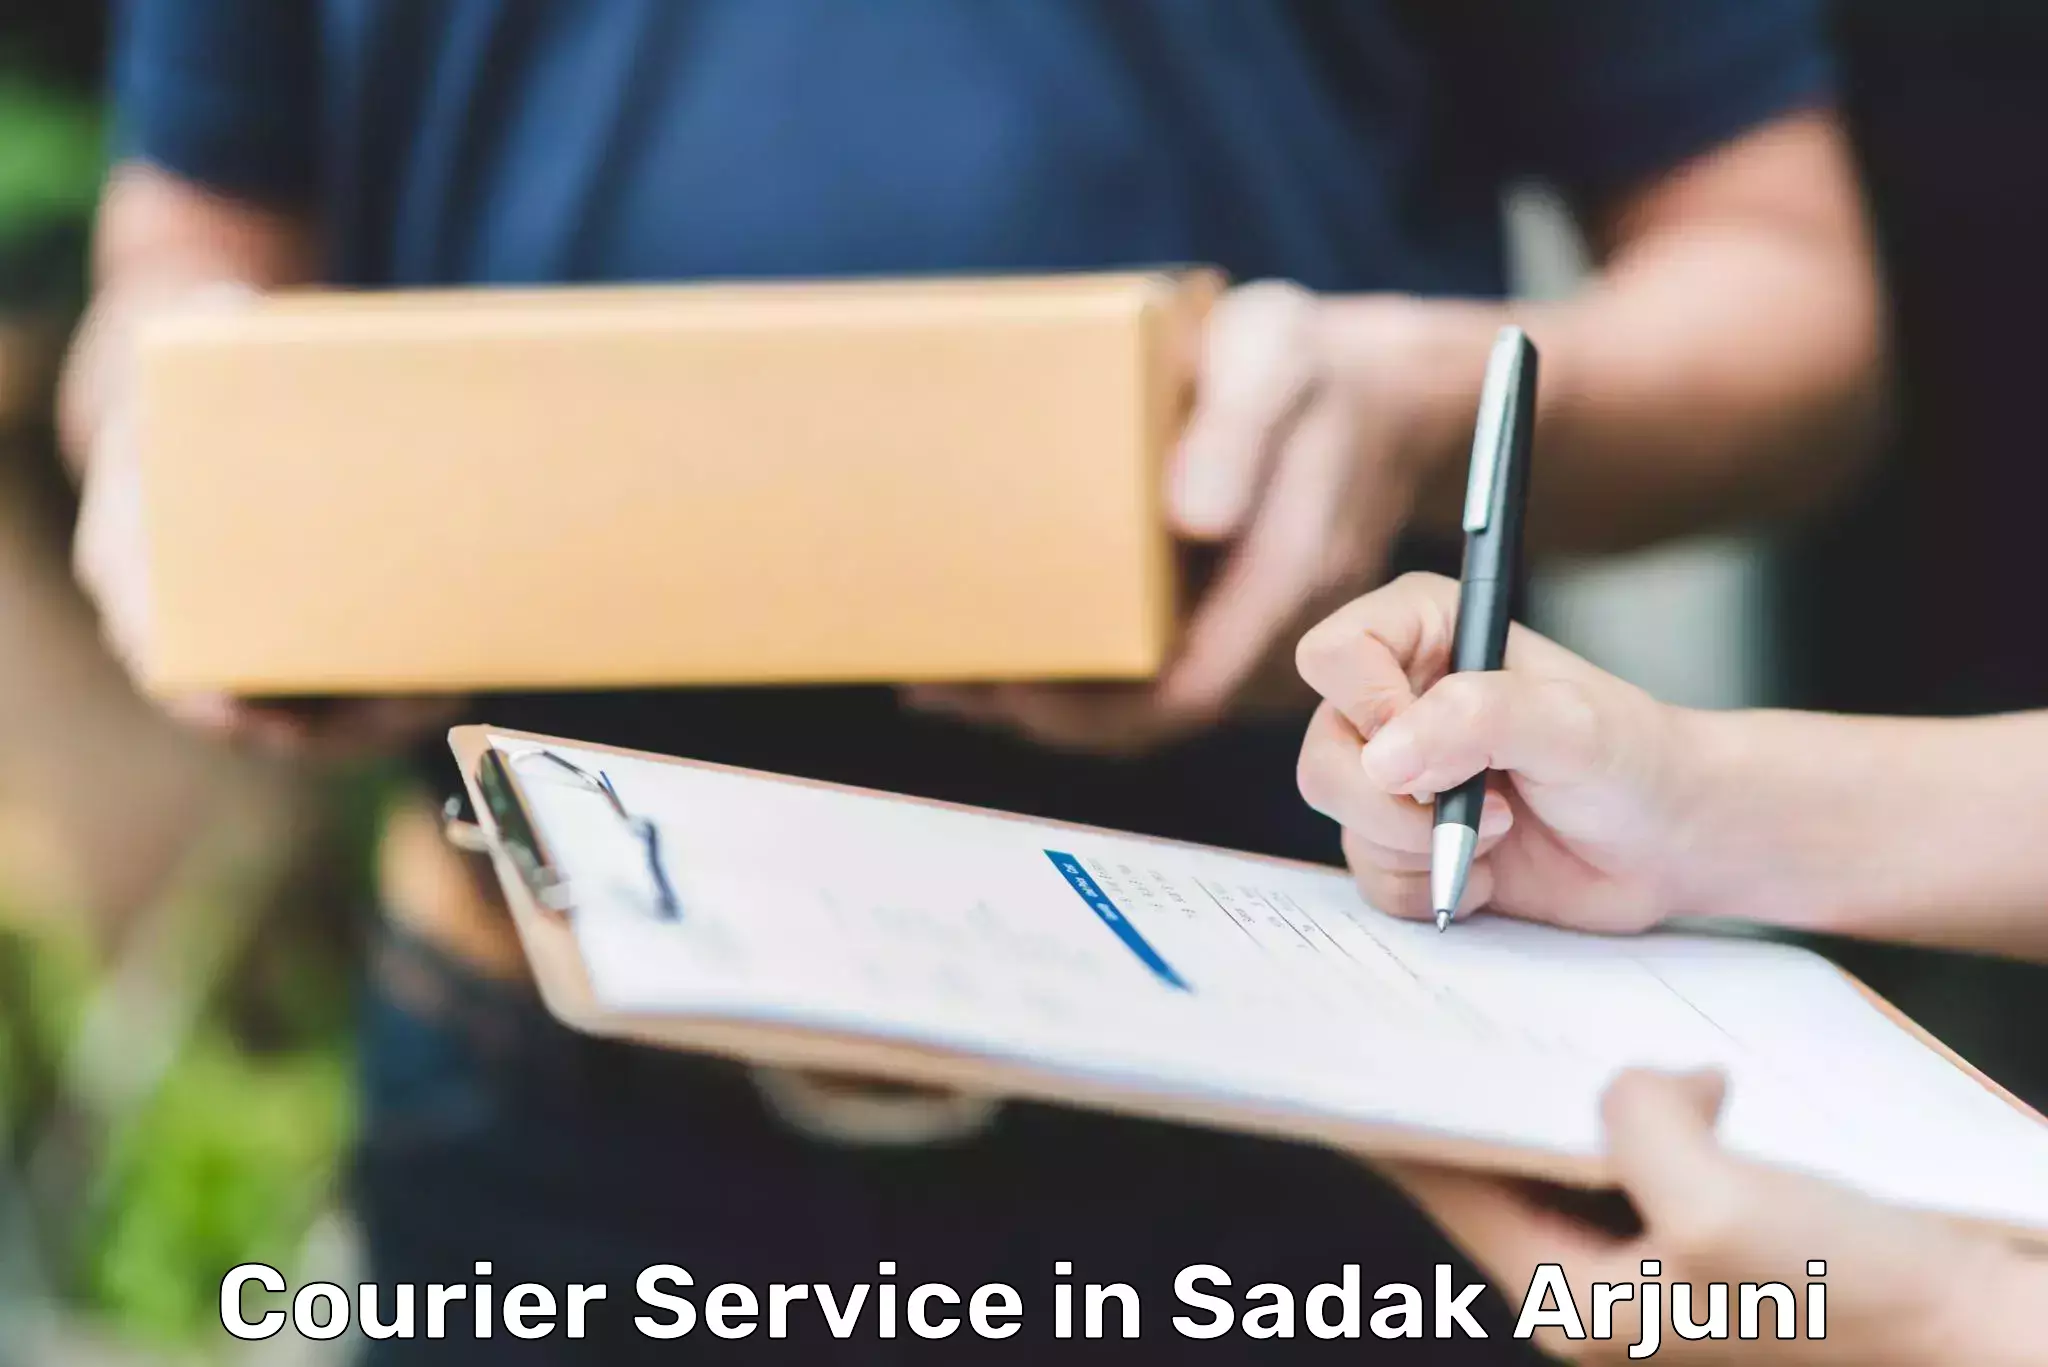 Fastest parcel delivery in Sadak Arjuni